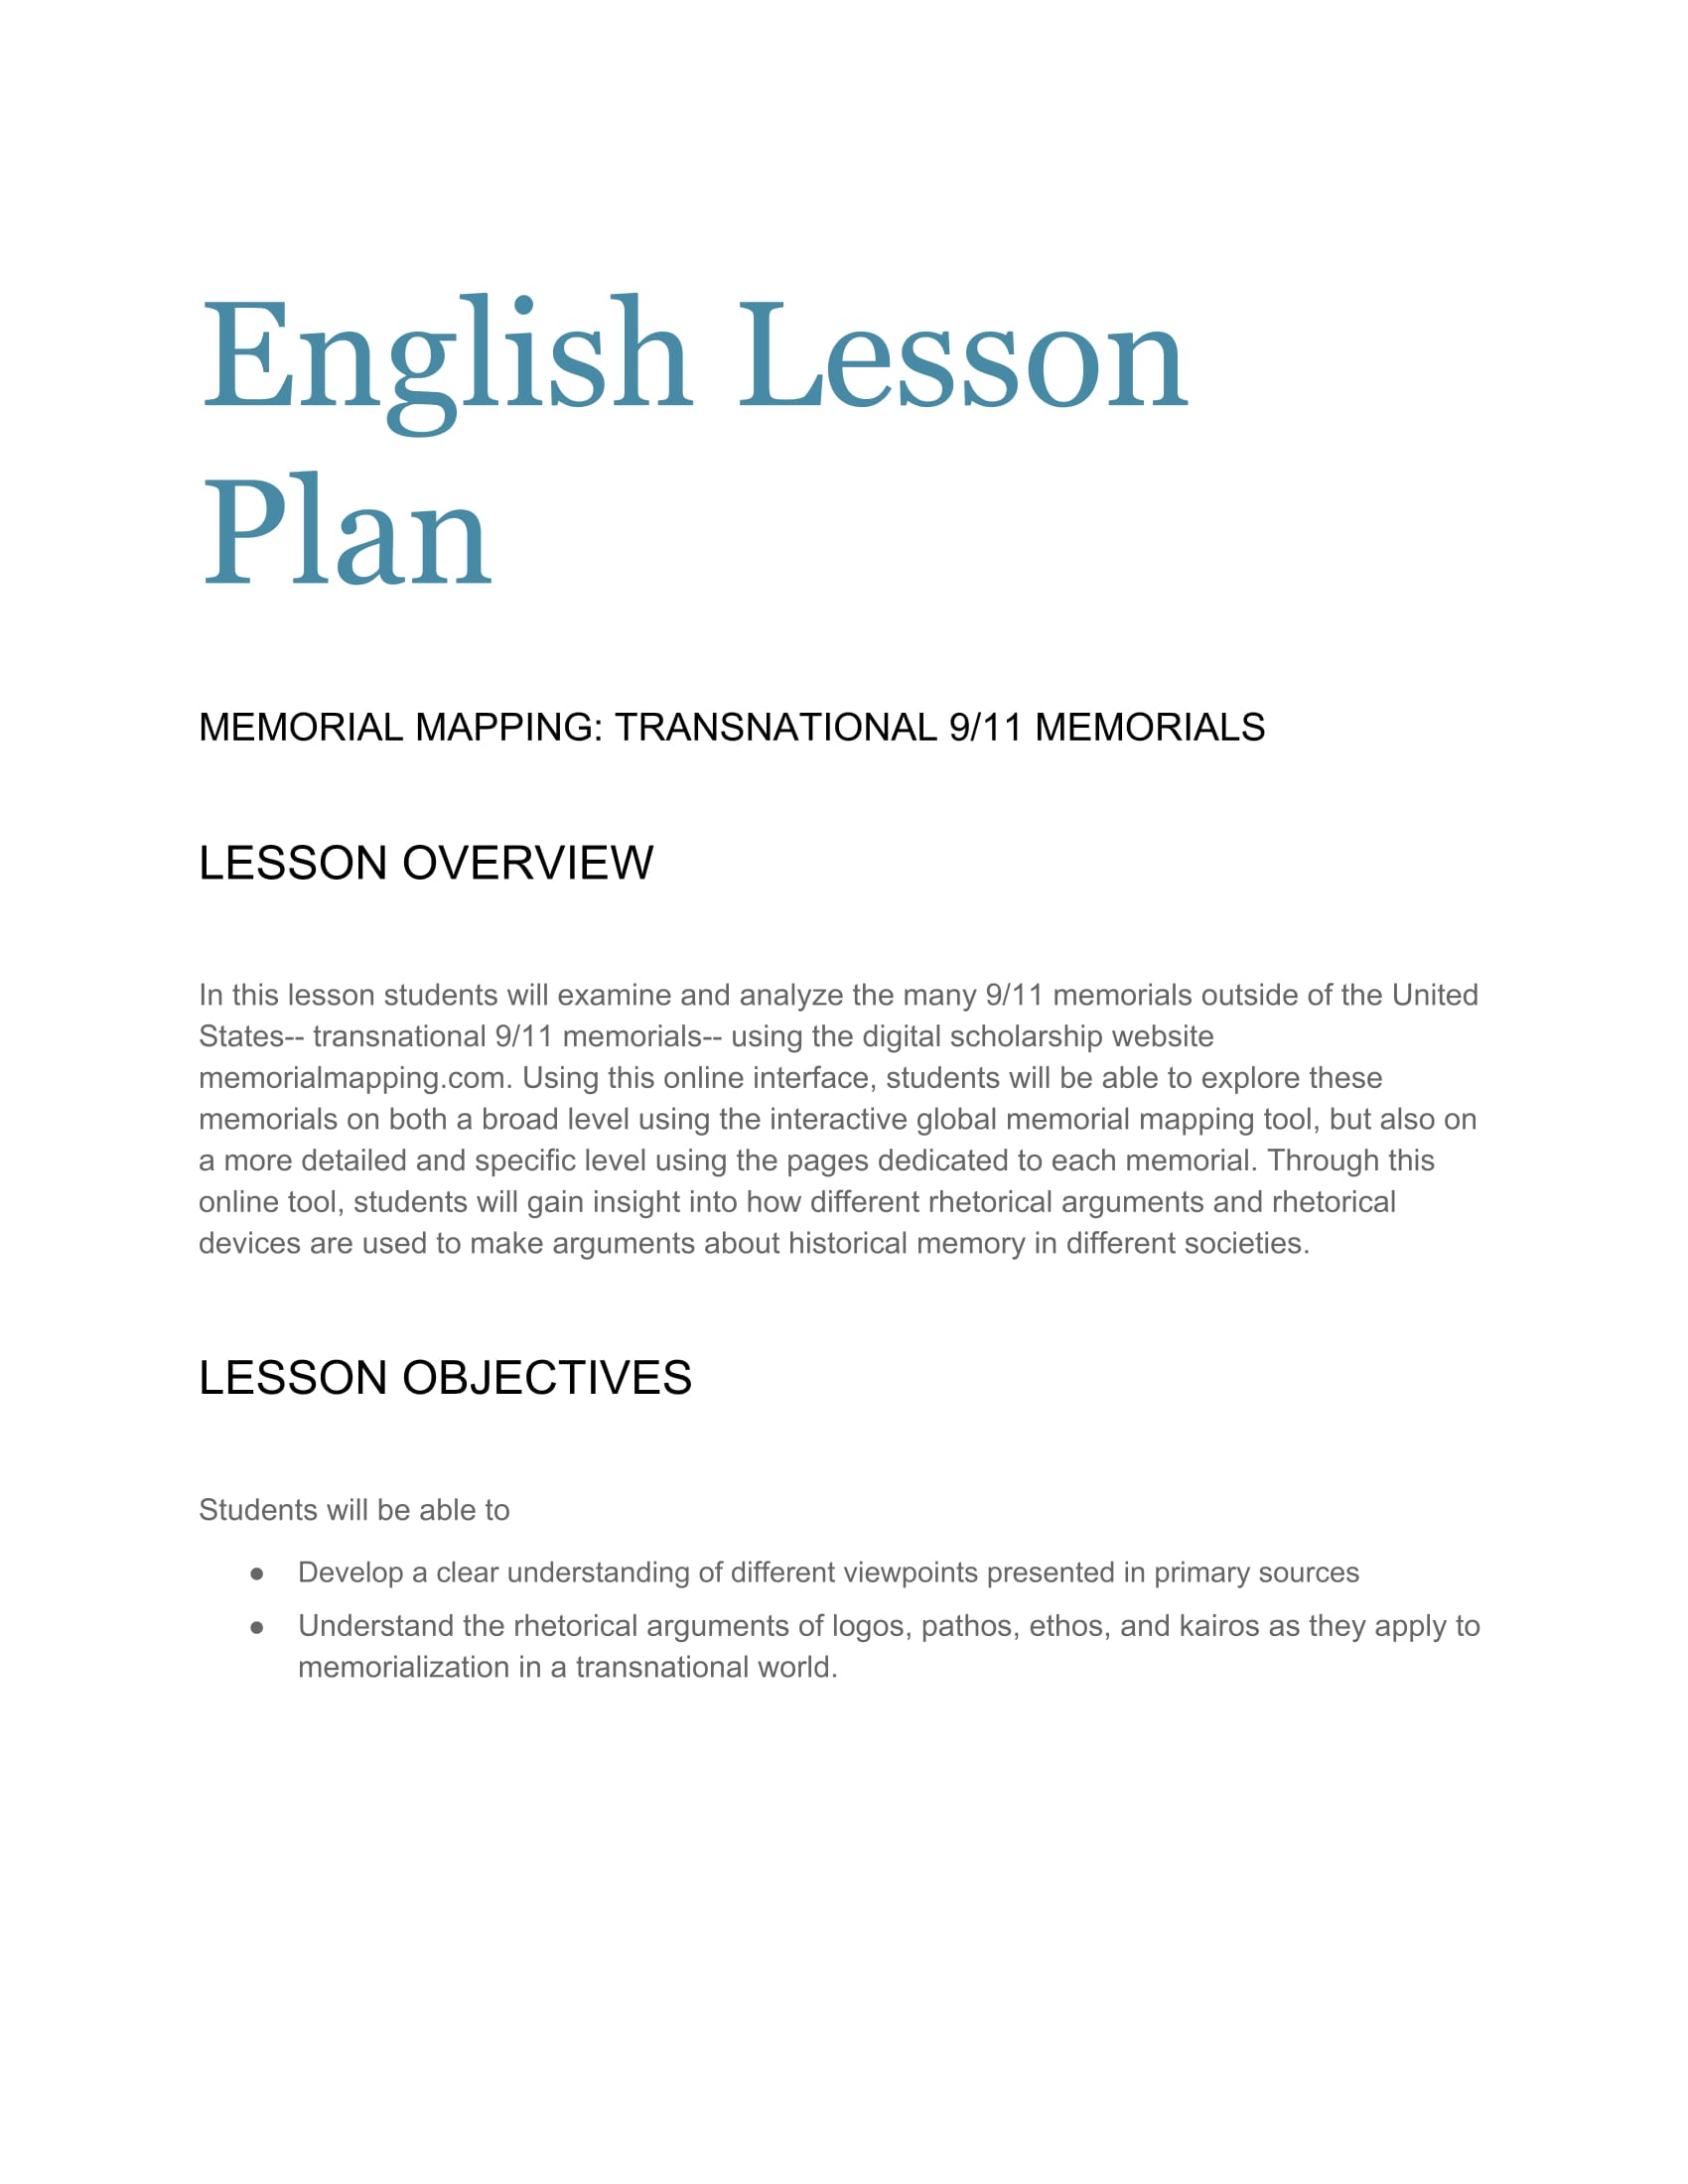 English Lesson Plan Final-1.jpg